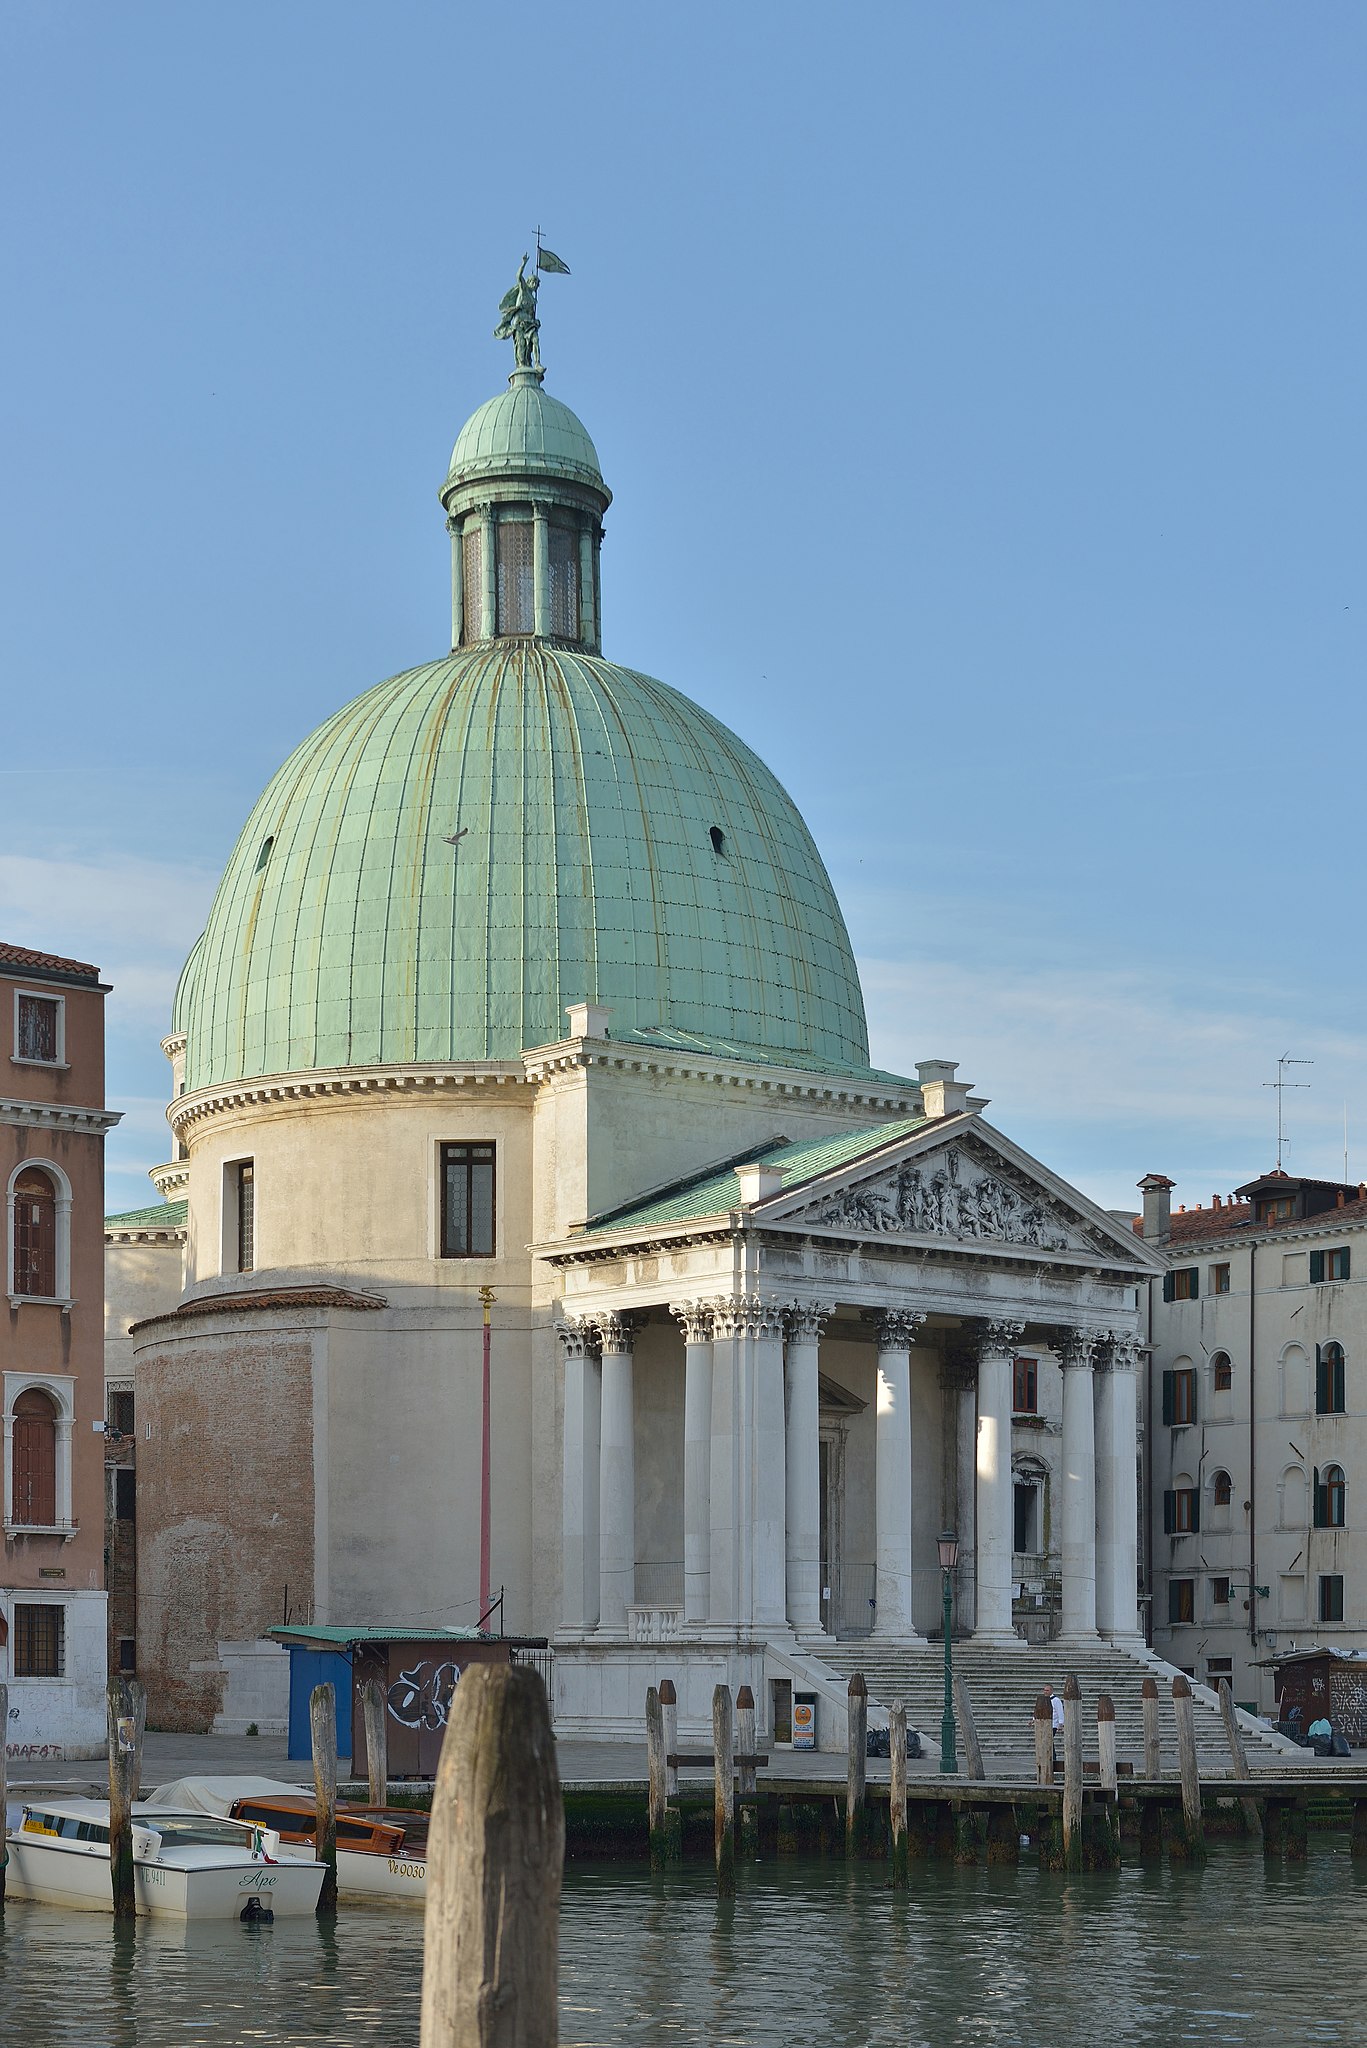 File:San Simeon Piccolo Venezia.jpg - Wikimedia Commons